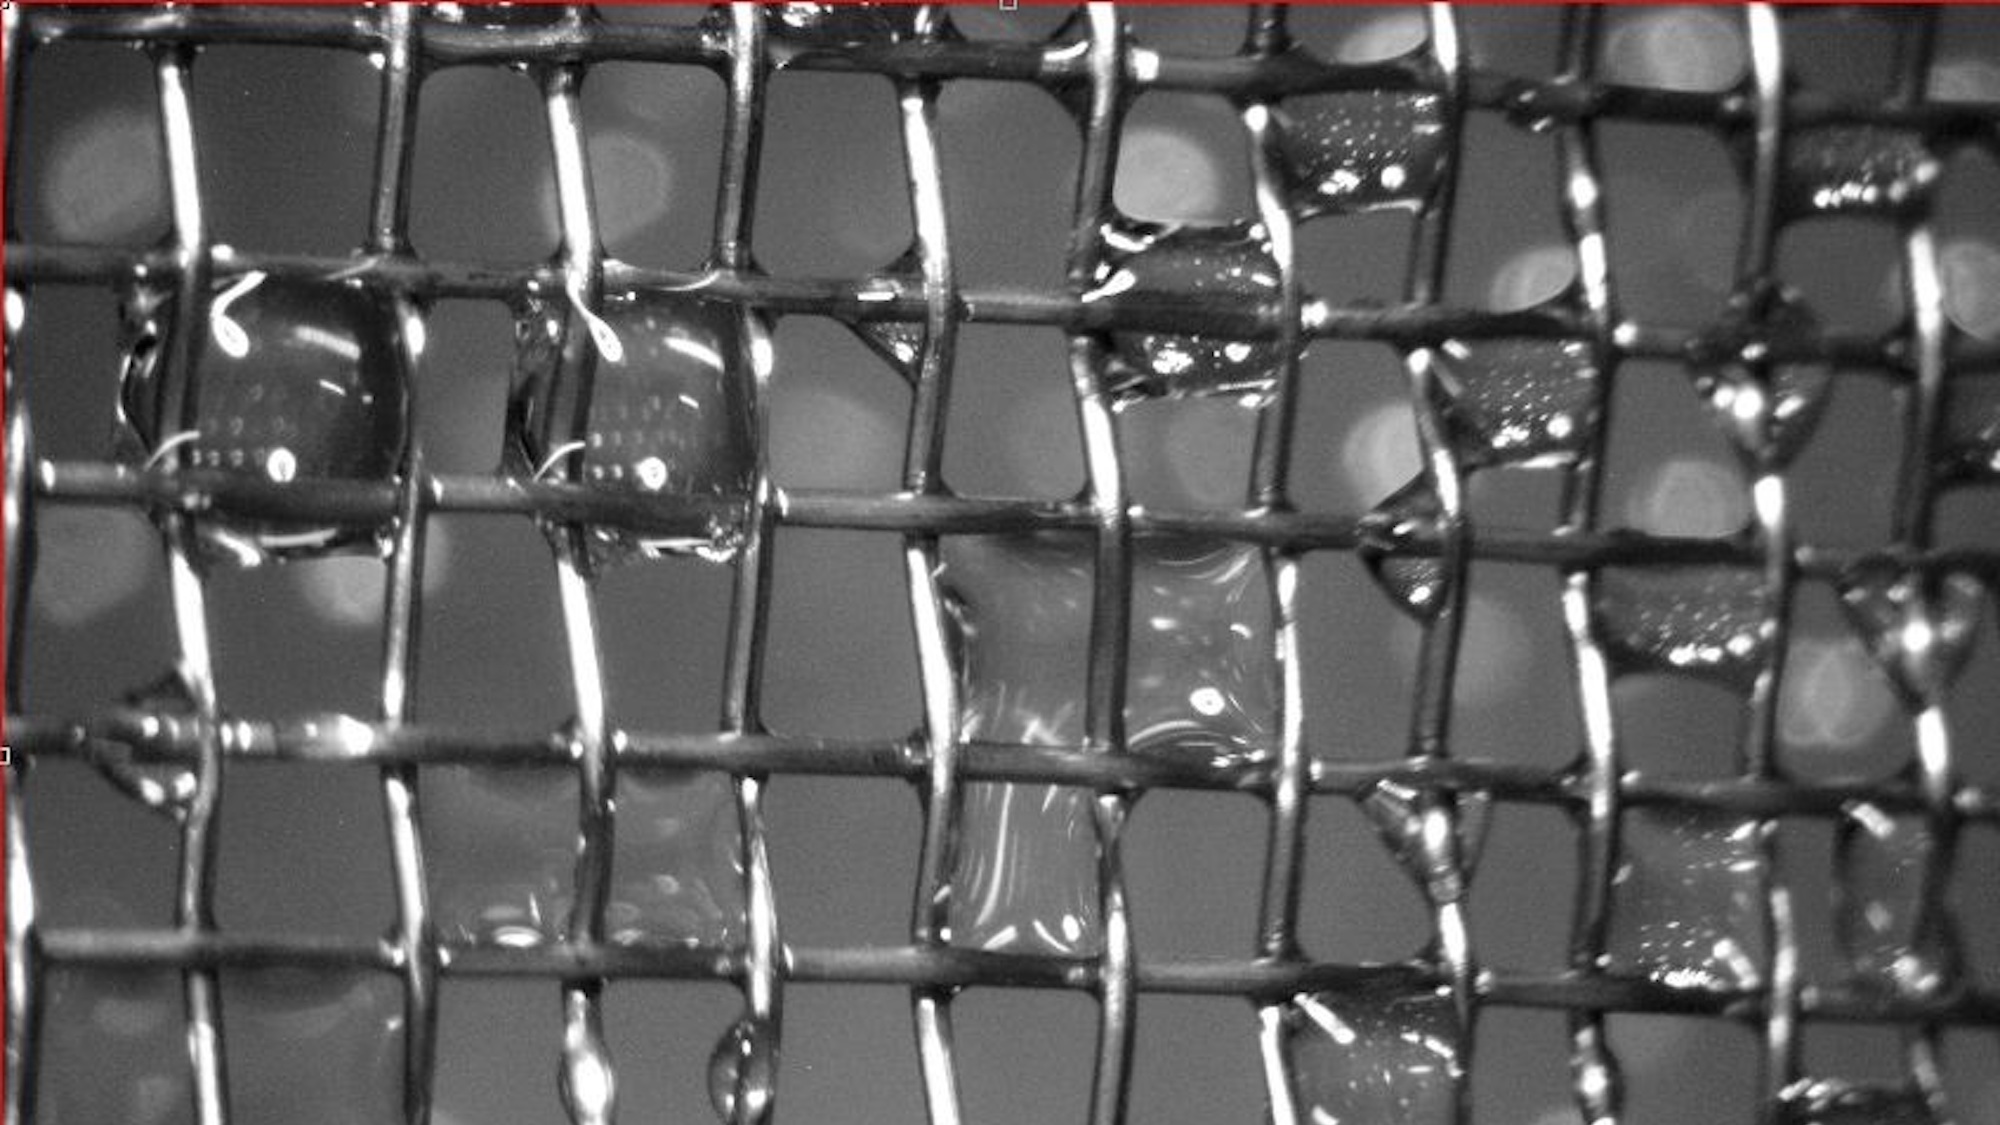 Titanium dioxide-coated mesh can purify contaminated fog